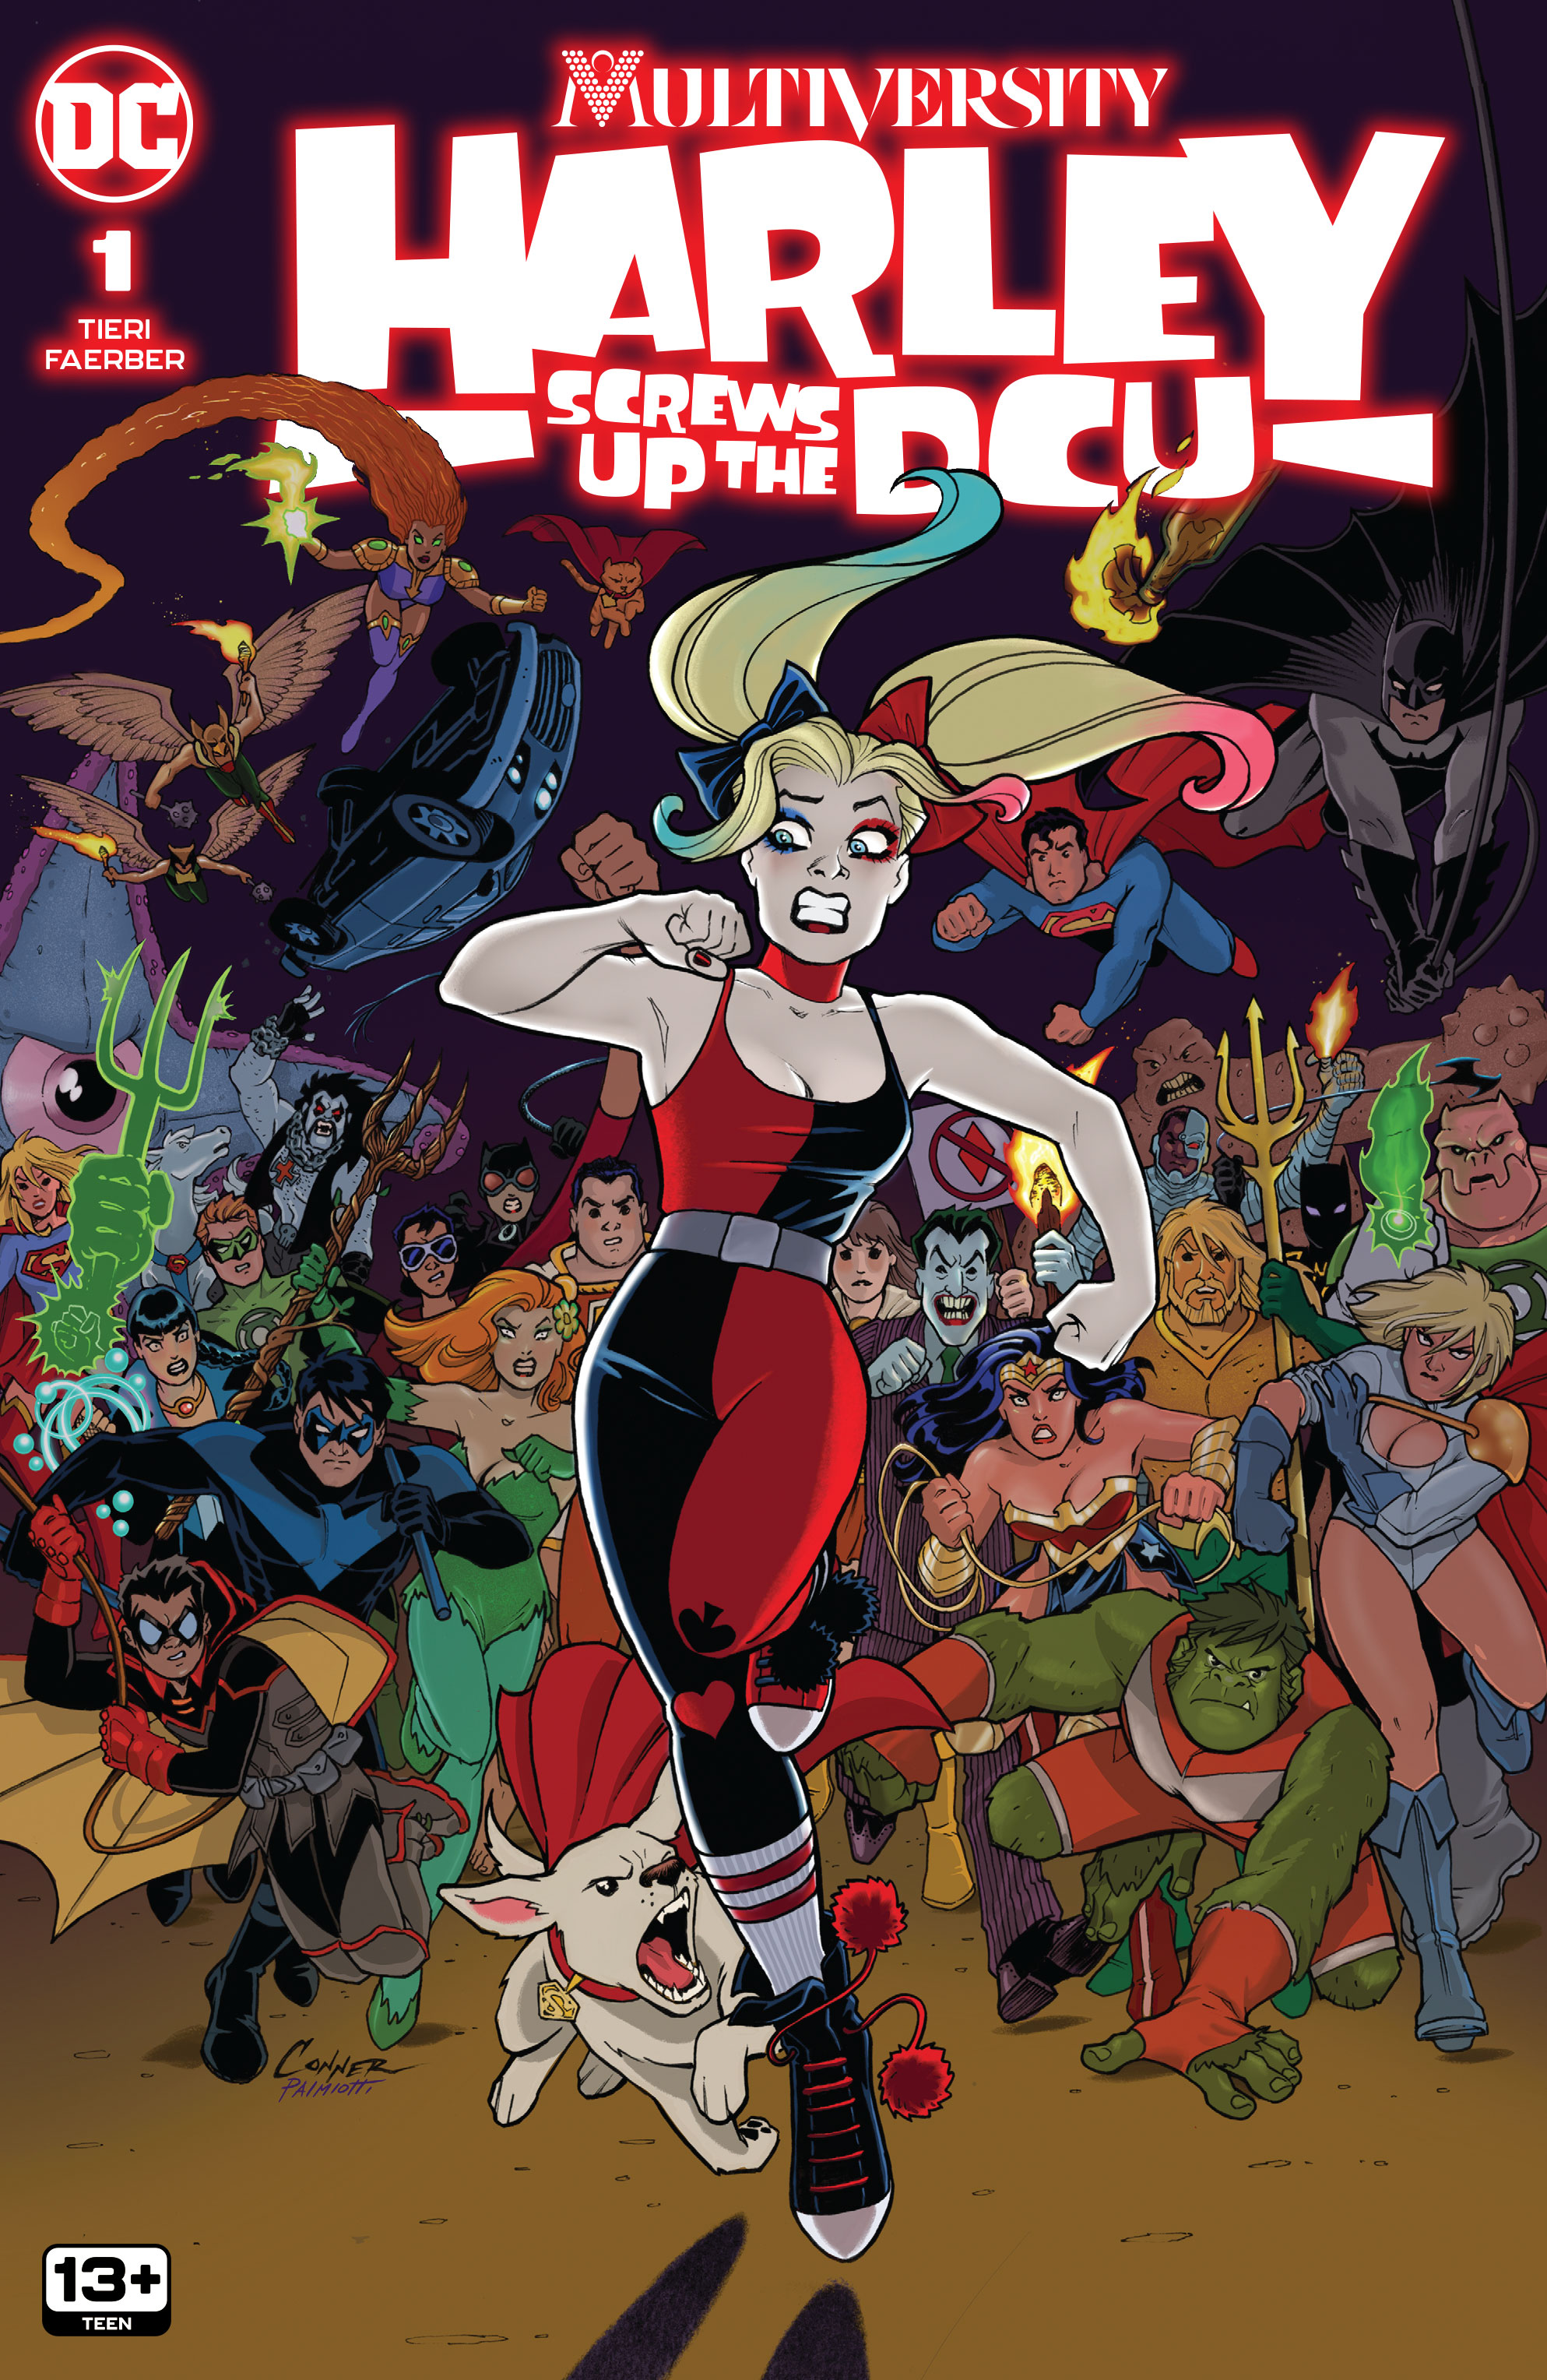 Deadpool And Harley Quinn Cartoon Porn - Multiversity: Harley Screws Up the DCU #1 review | Batman News